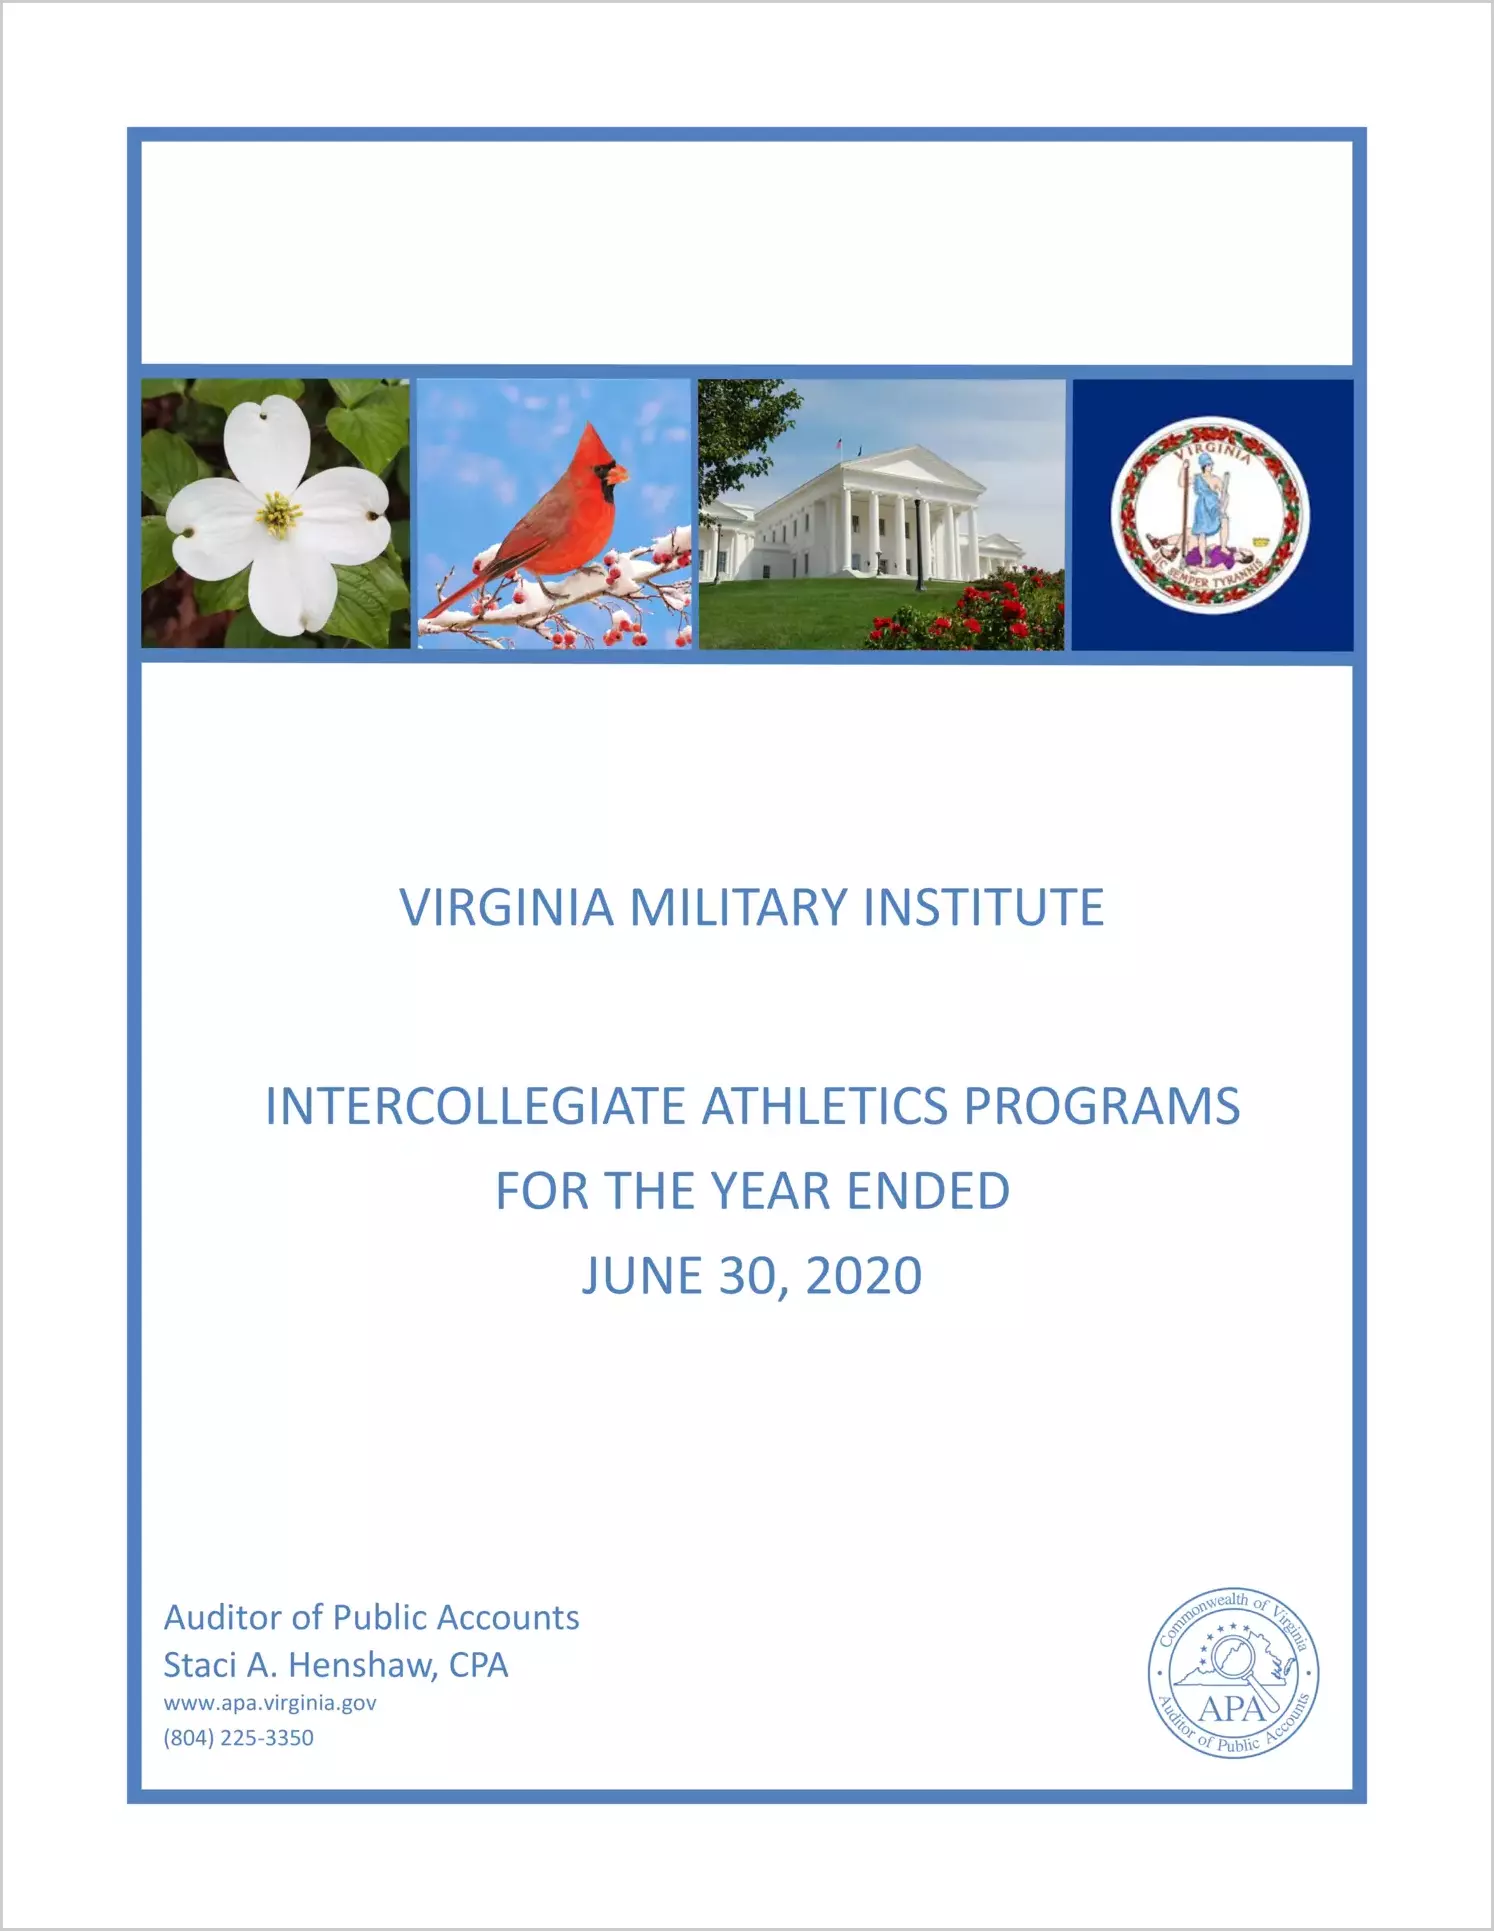 Virginia Military Institute Intercollegiate Athletics Programs for the year ended June 30, 2020